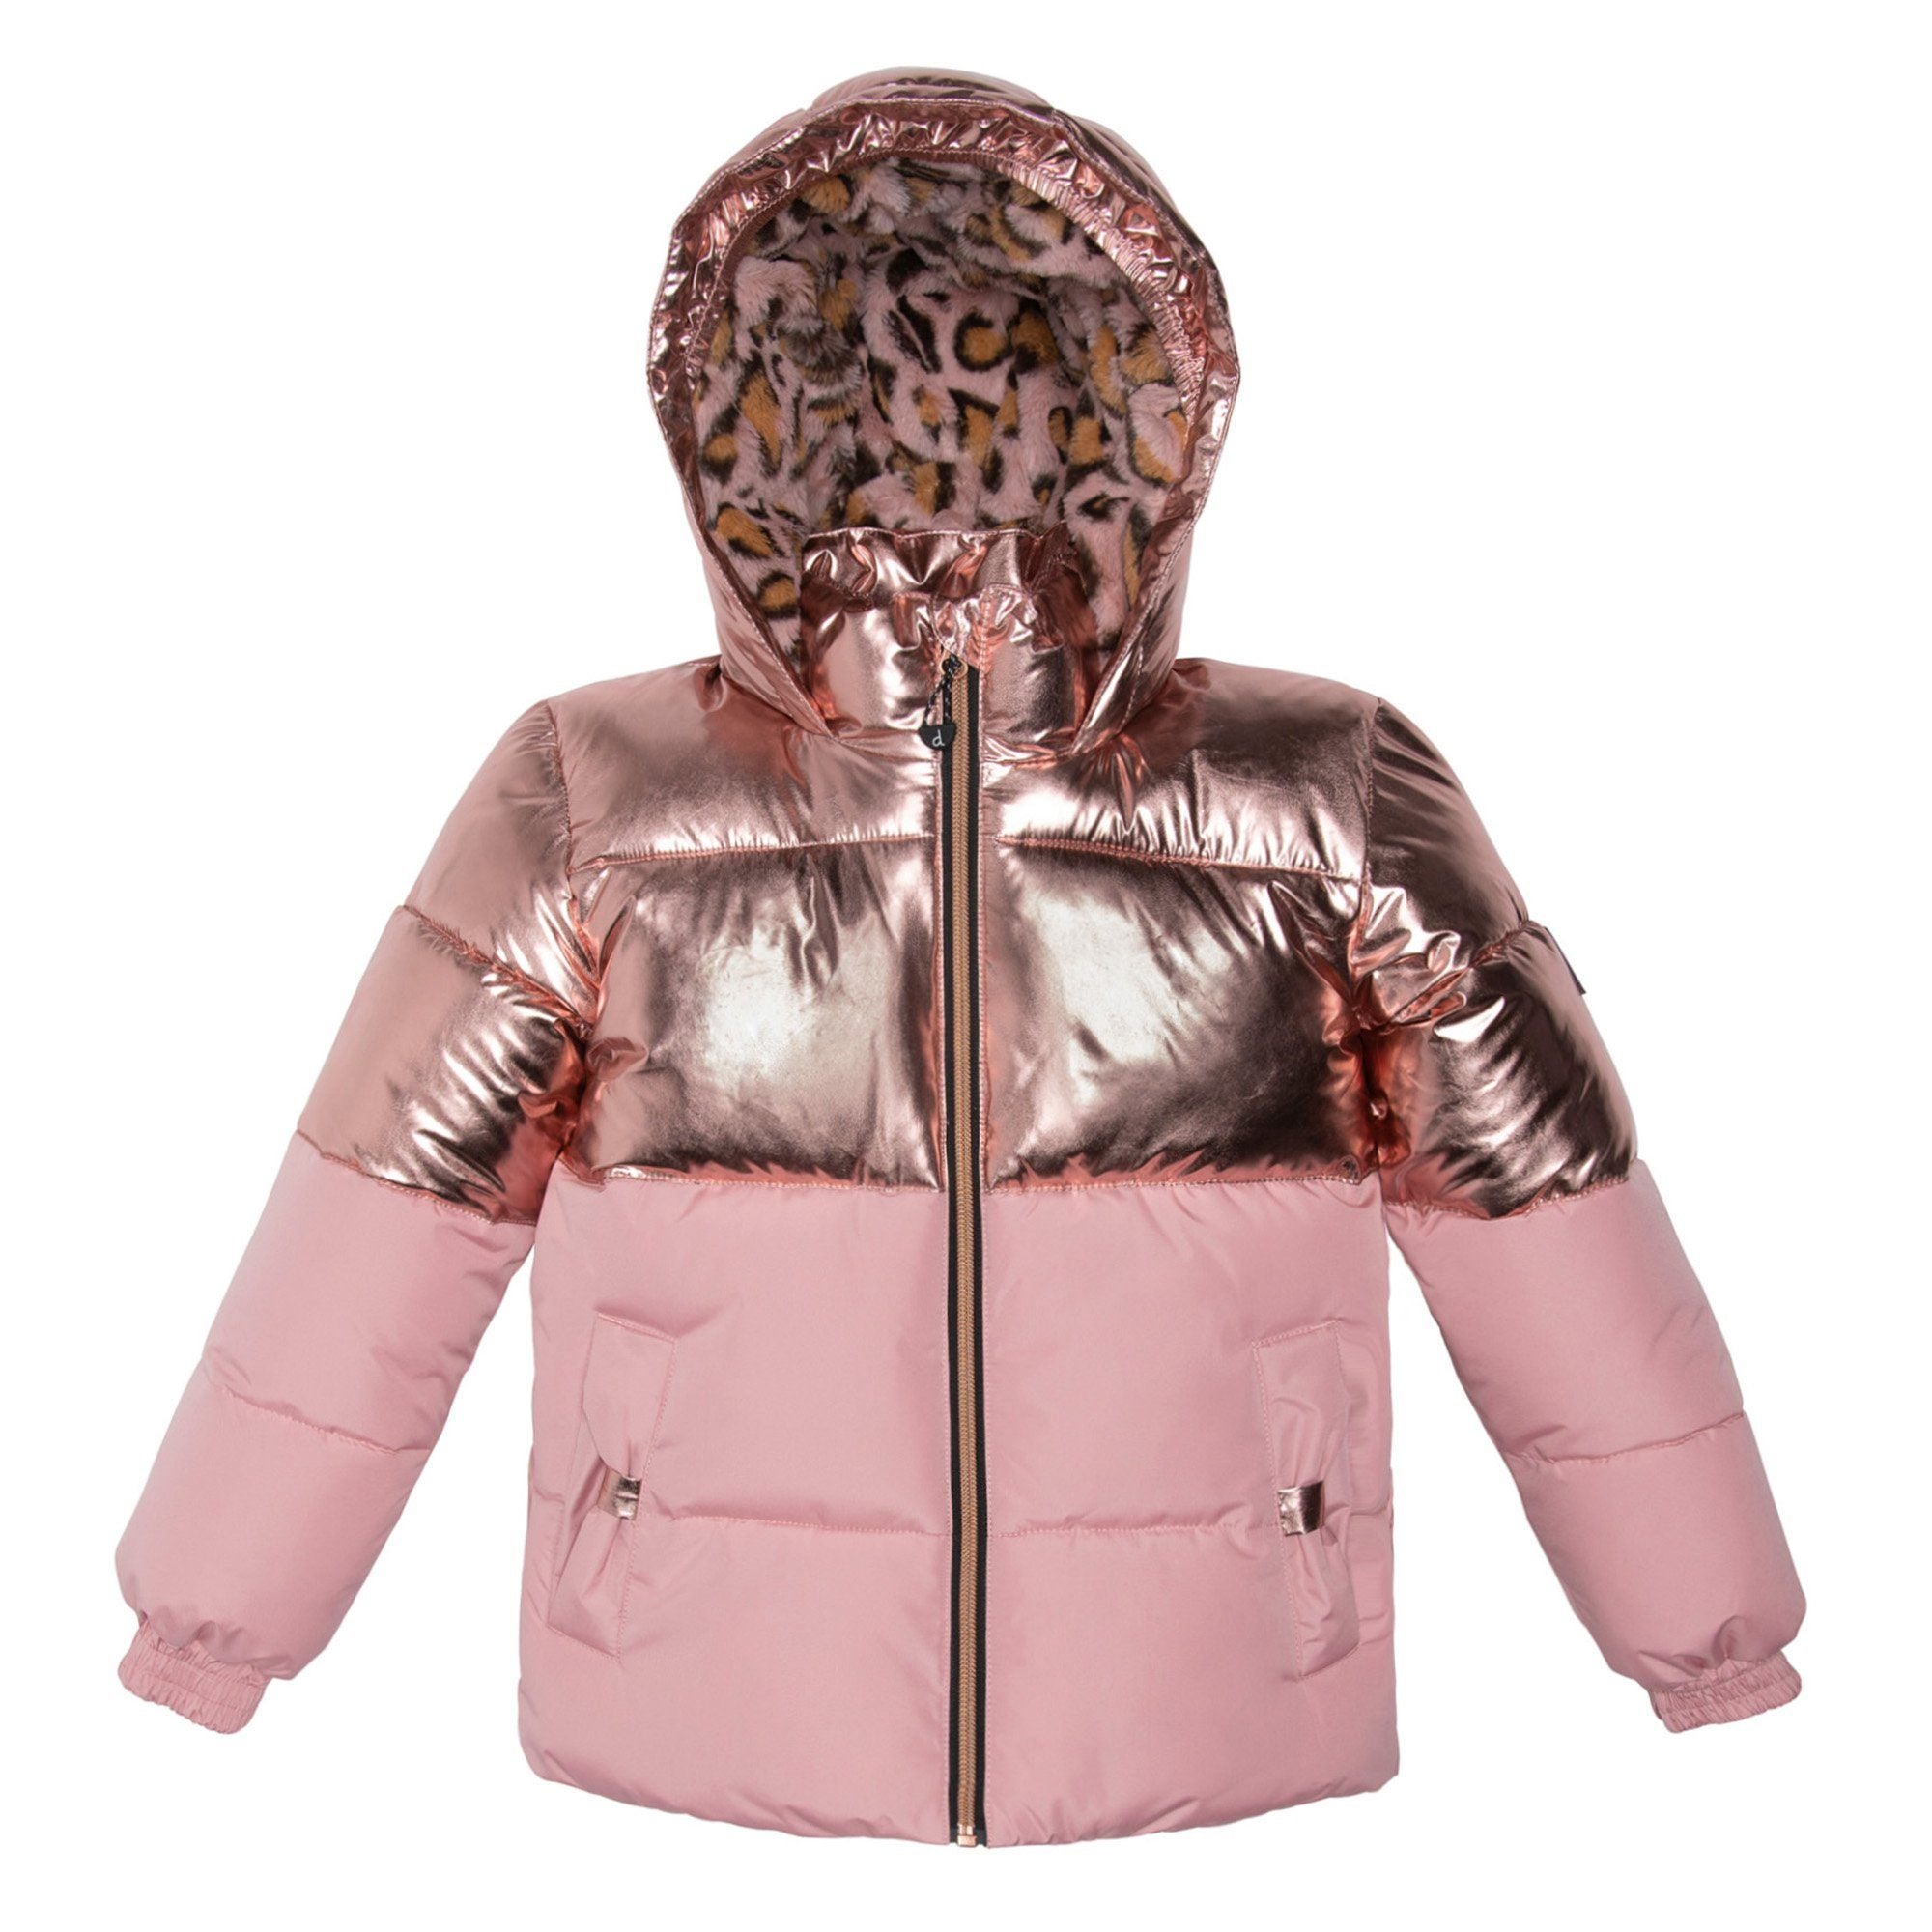 Puffy Winter Jacket Light Pink and Rose Gold Metallic